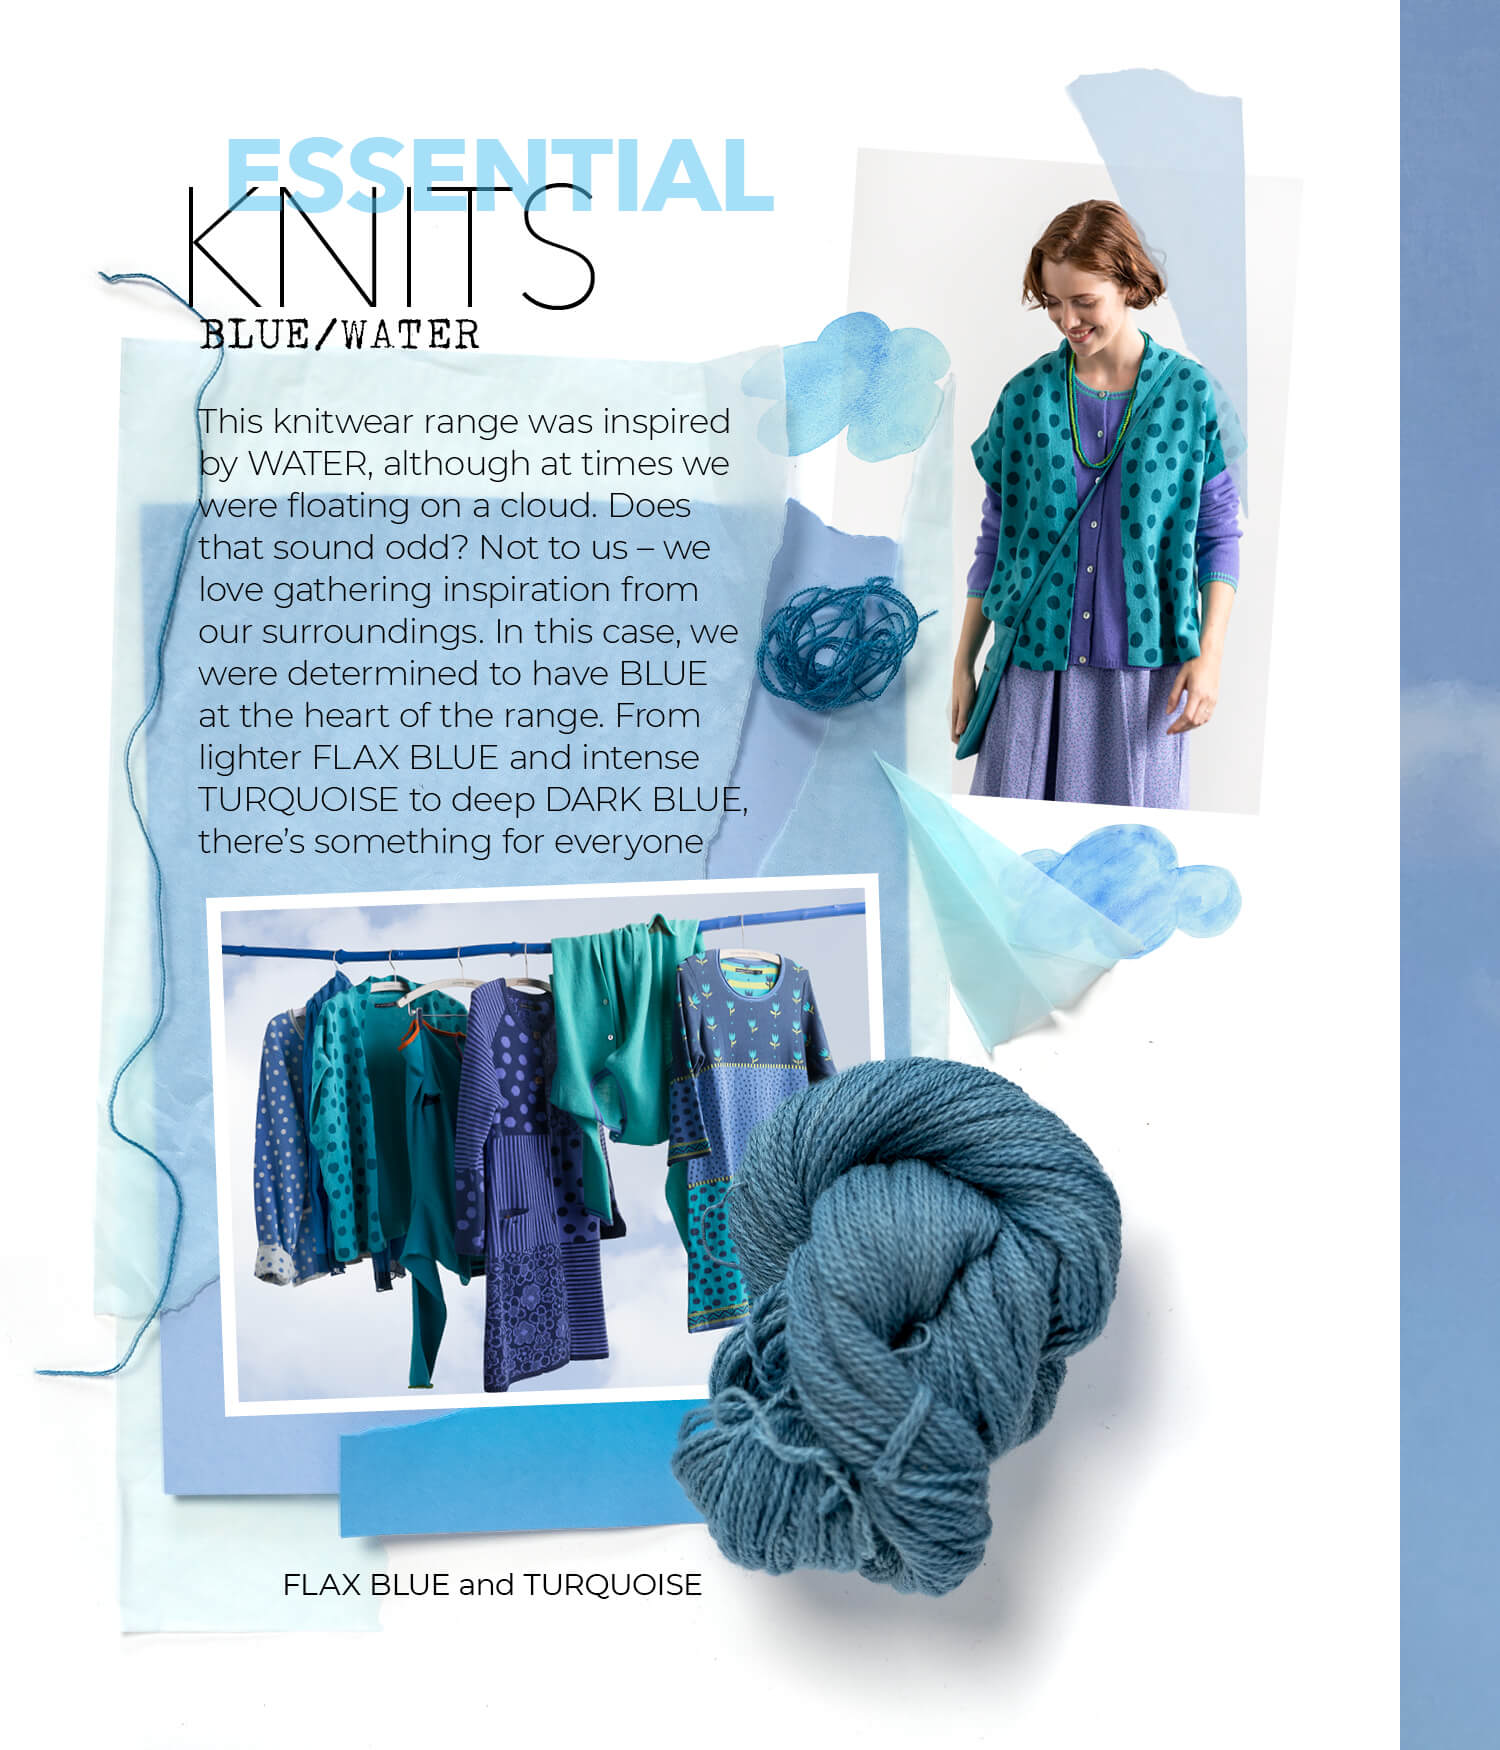 Knitwear in natural fabrics